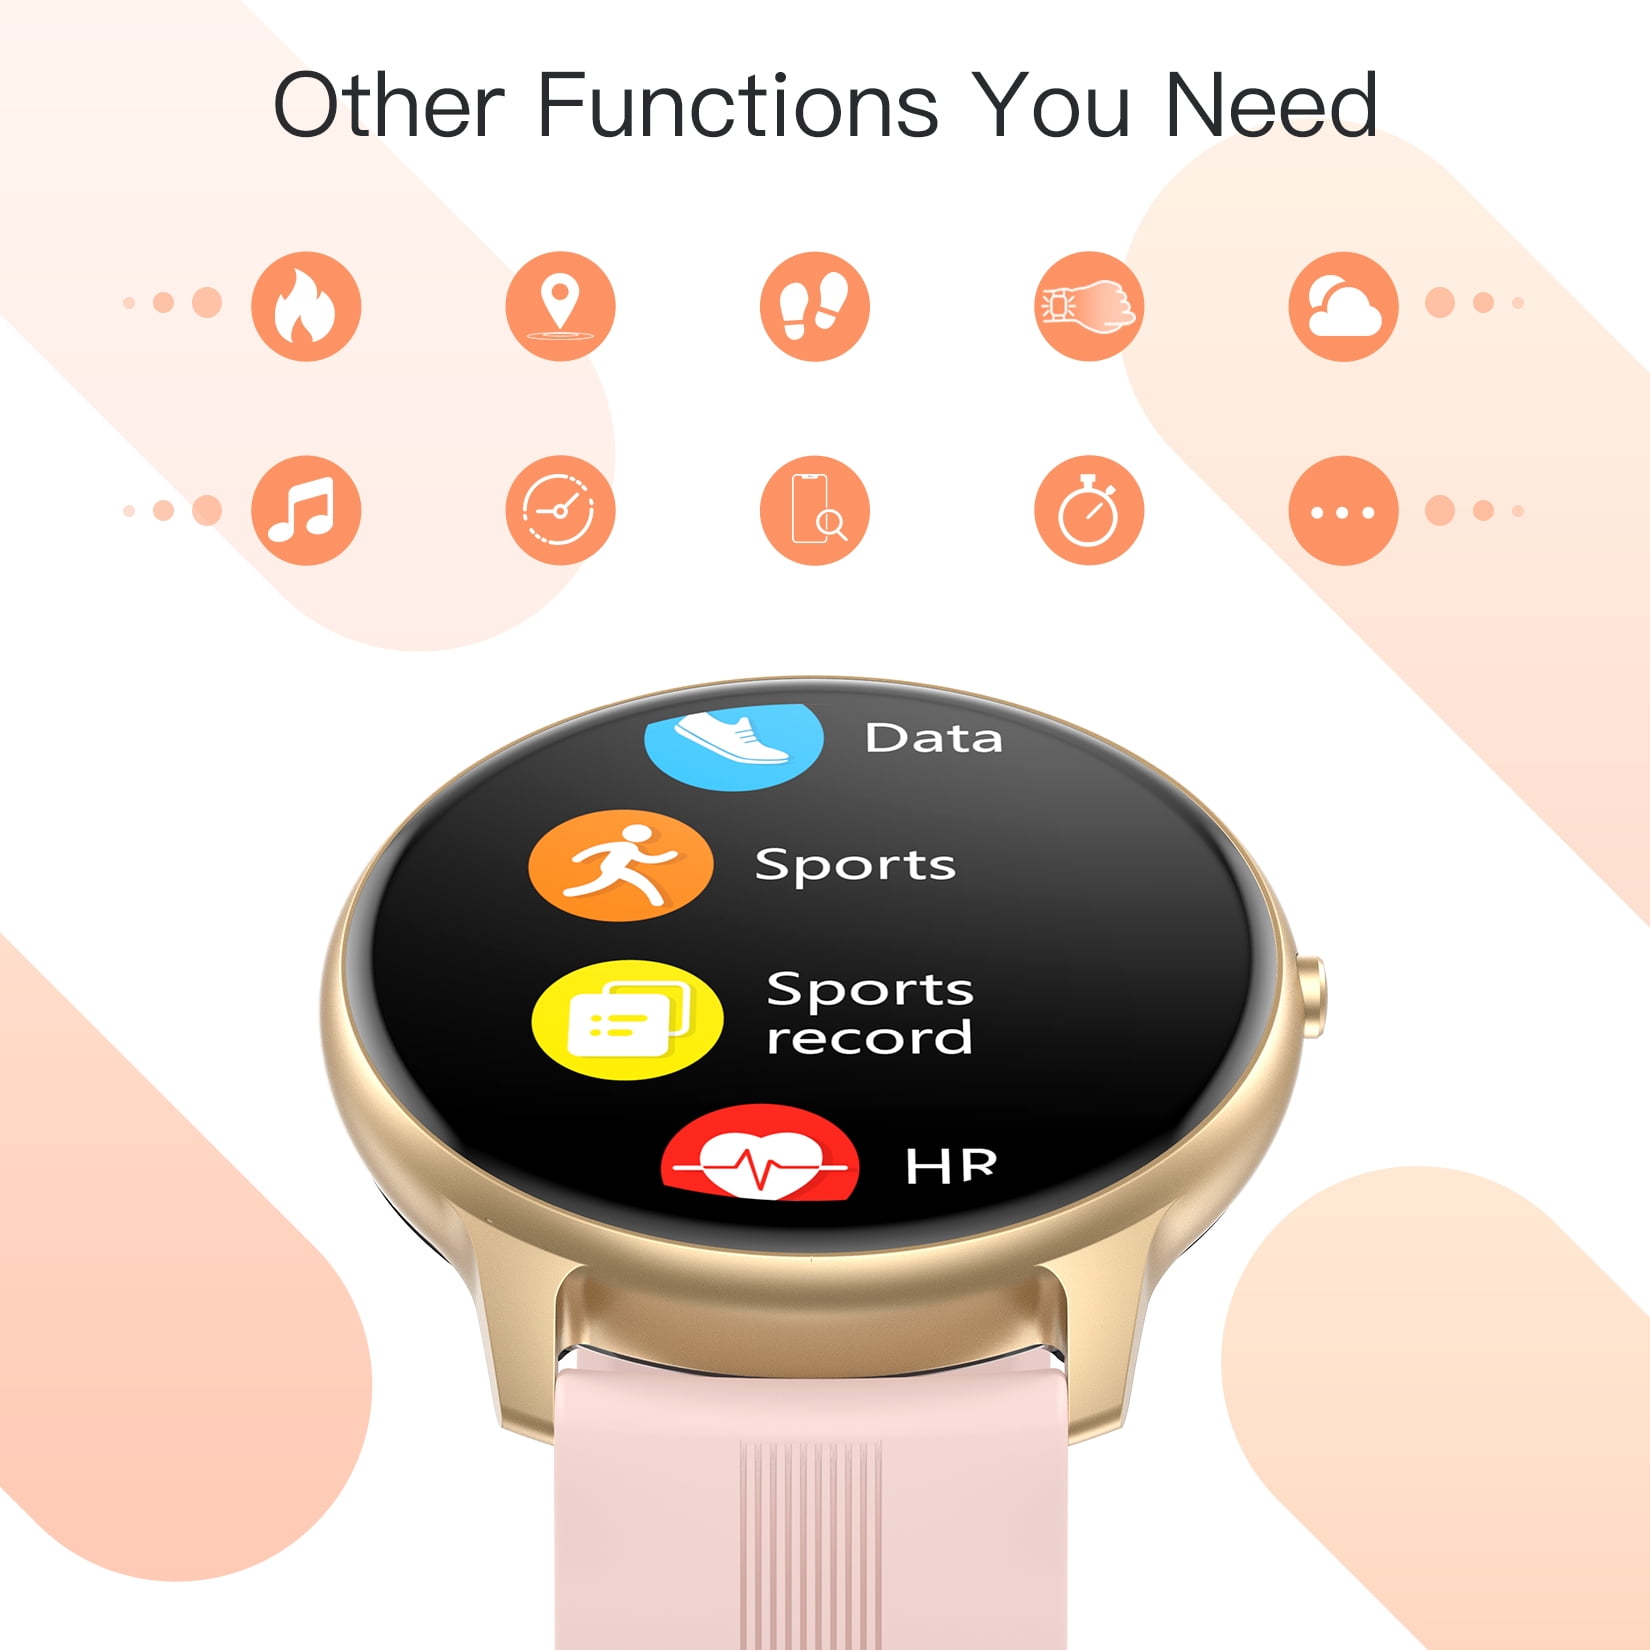 AGPTEK Montre Connectée Femme Smartwatch Bluetooth 5.0 Tracker d